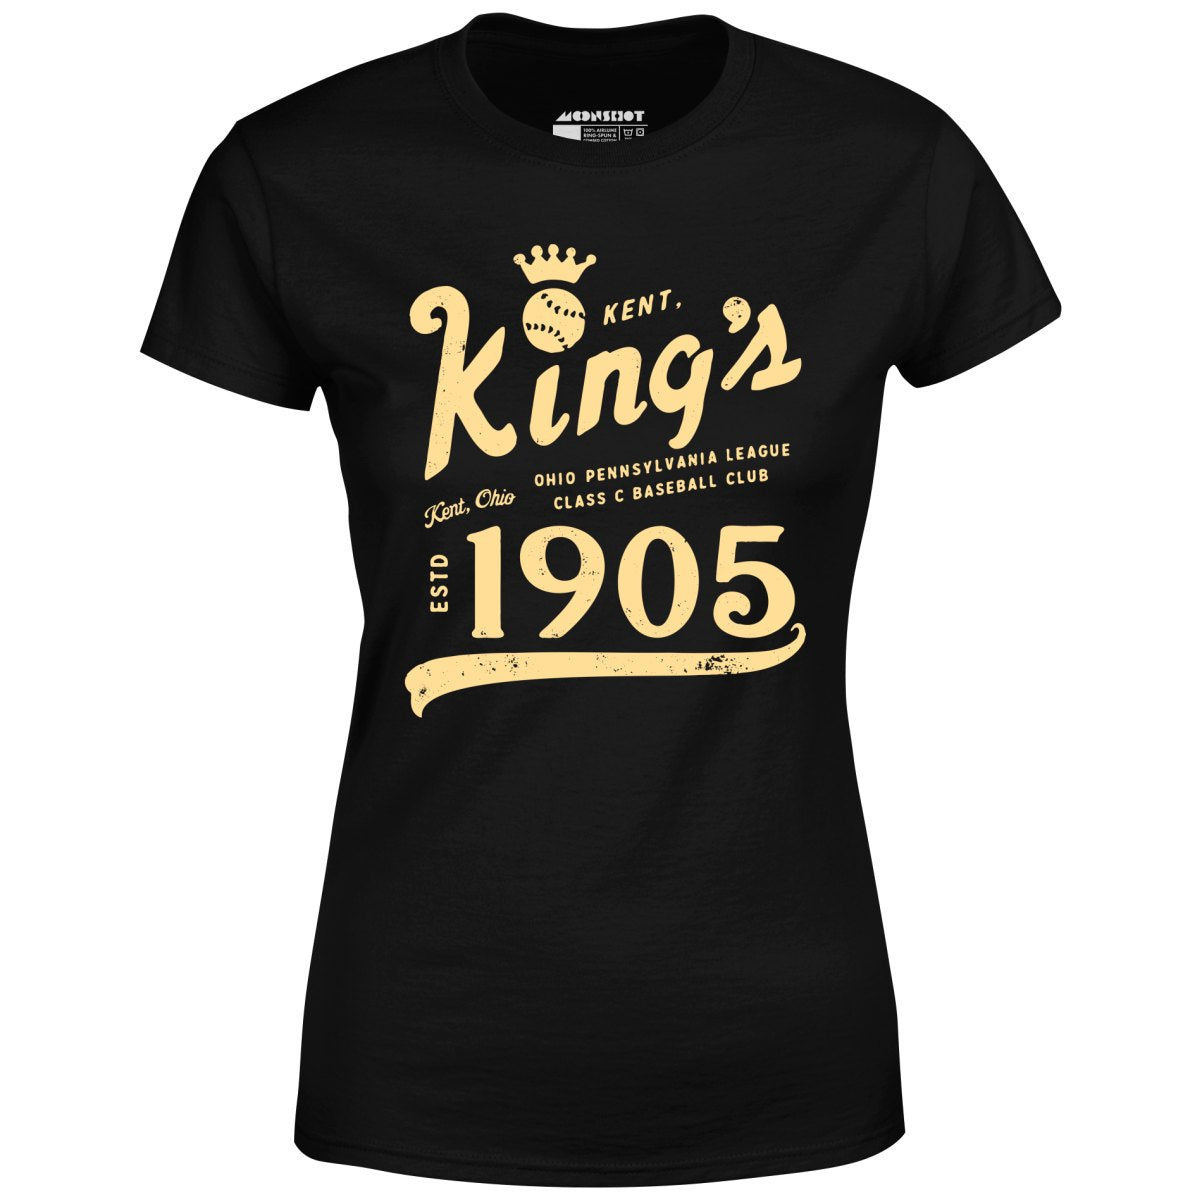 Kent Kings - Ohio - Vintage Defunct Baseball Teams - Women's T-Shirt